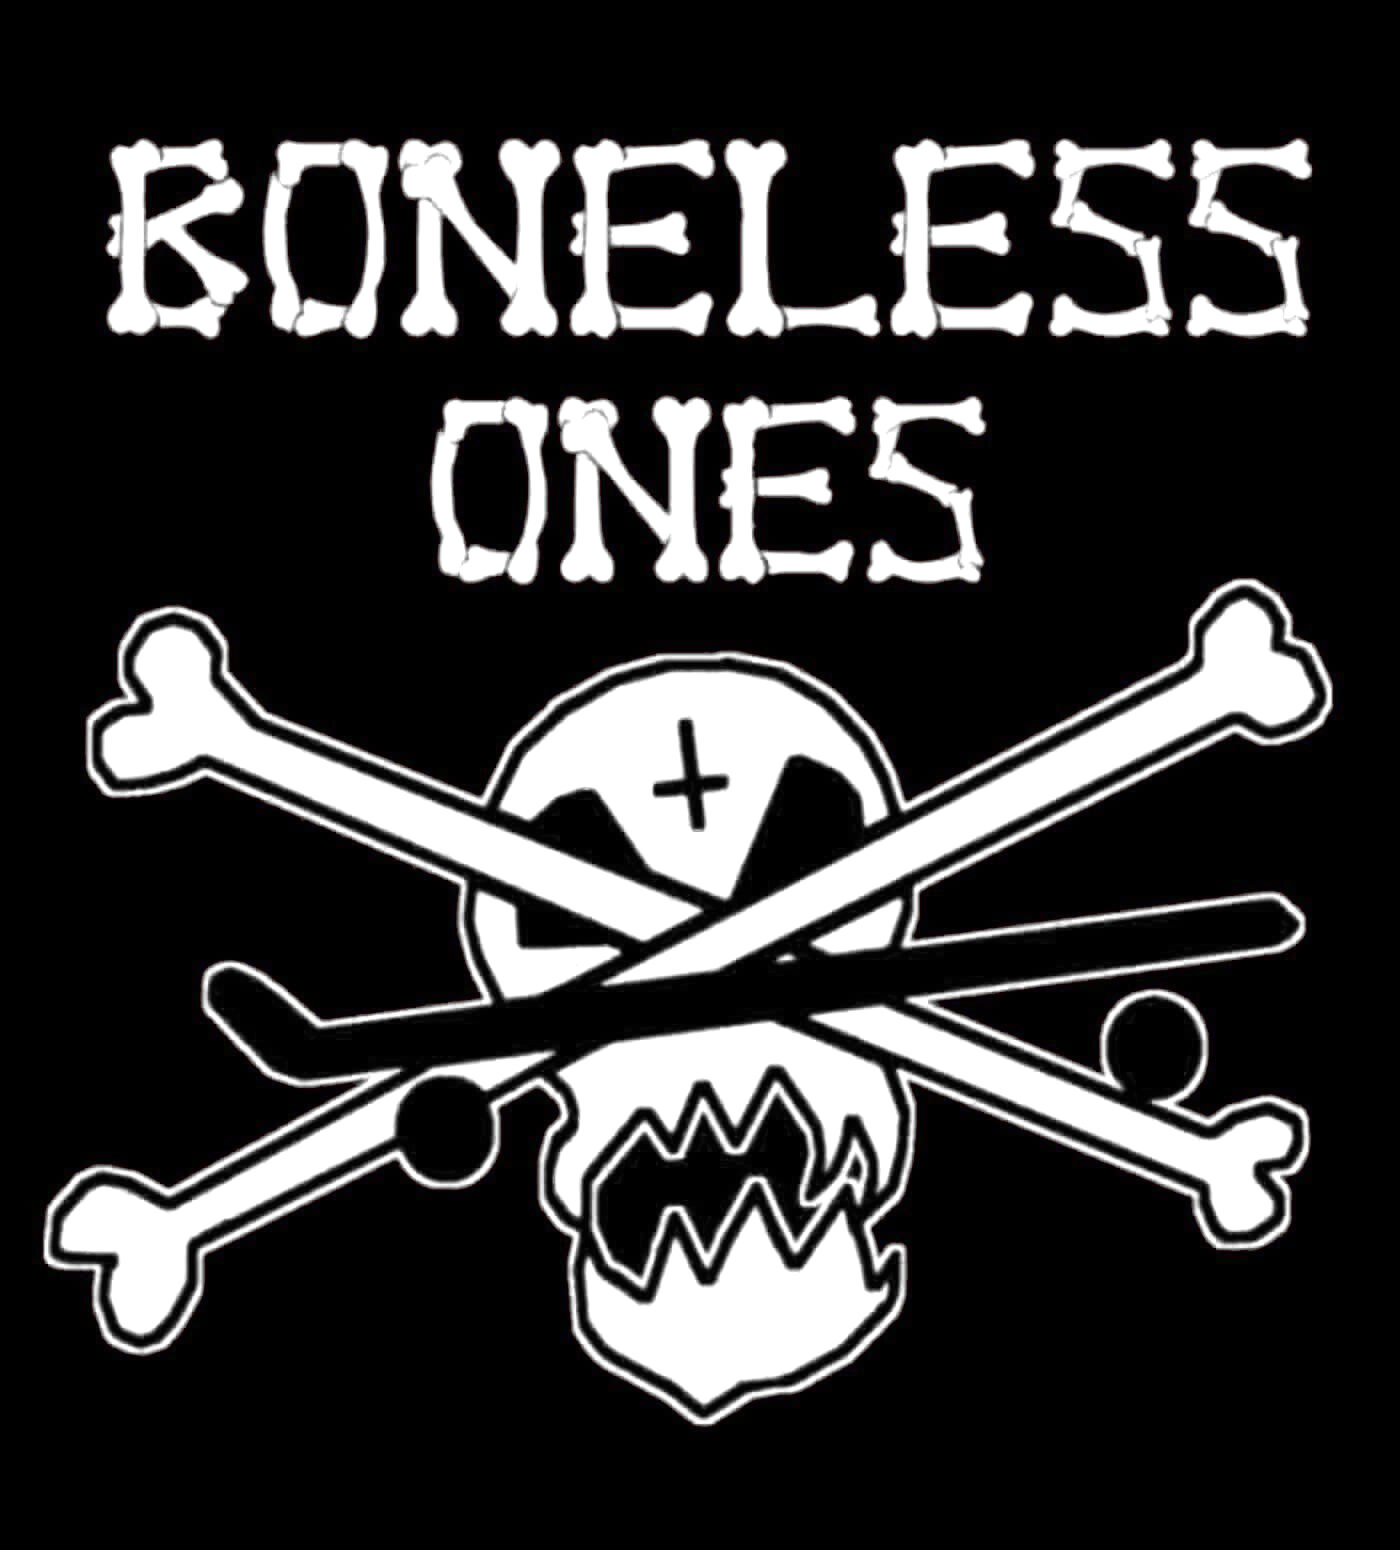 Boneless Ones